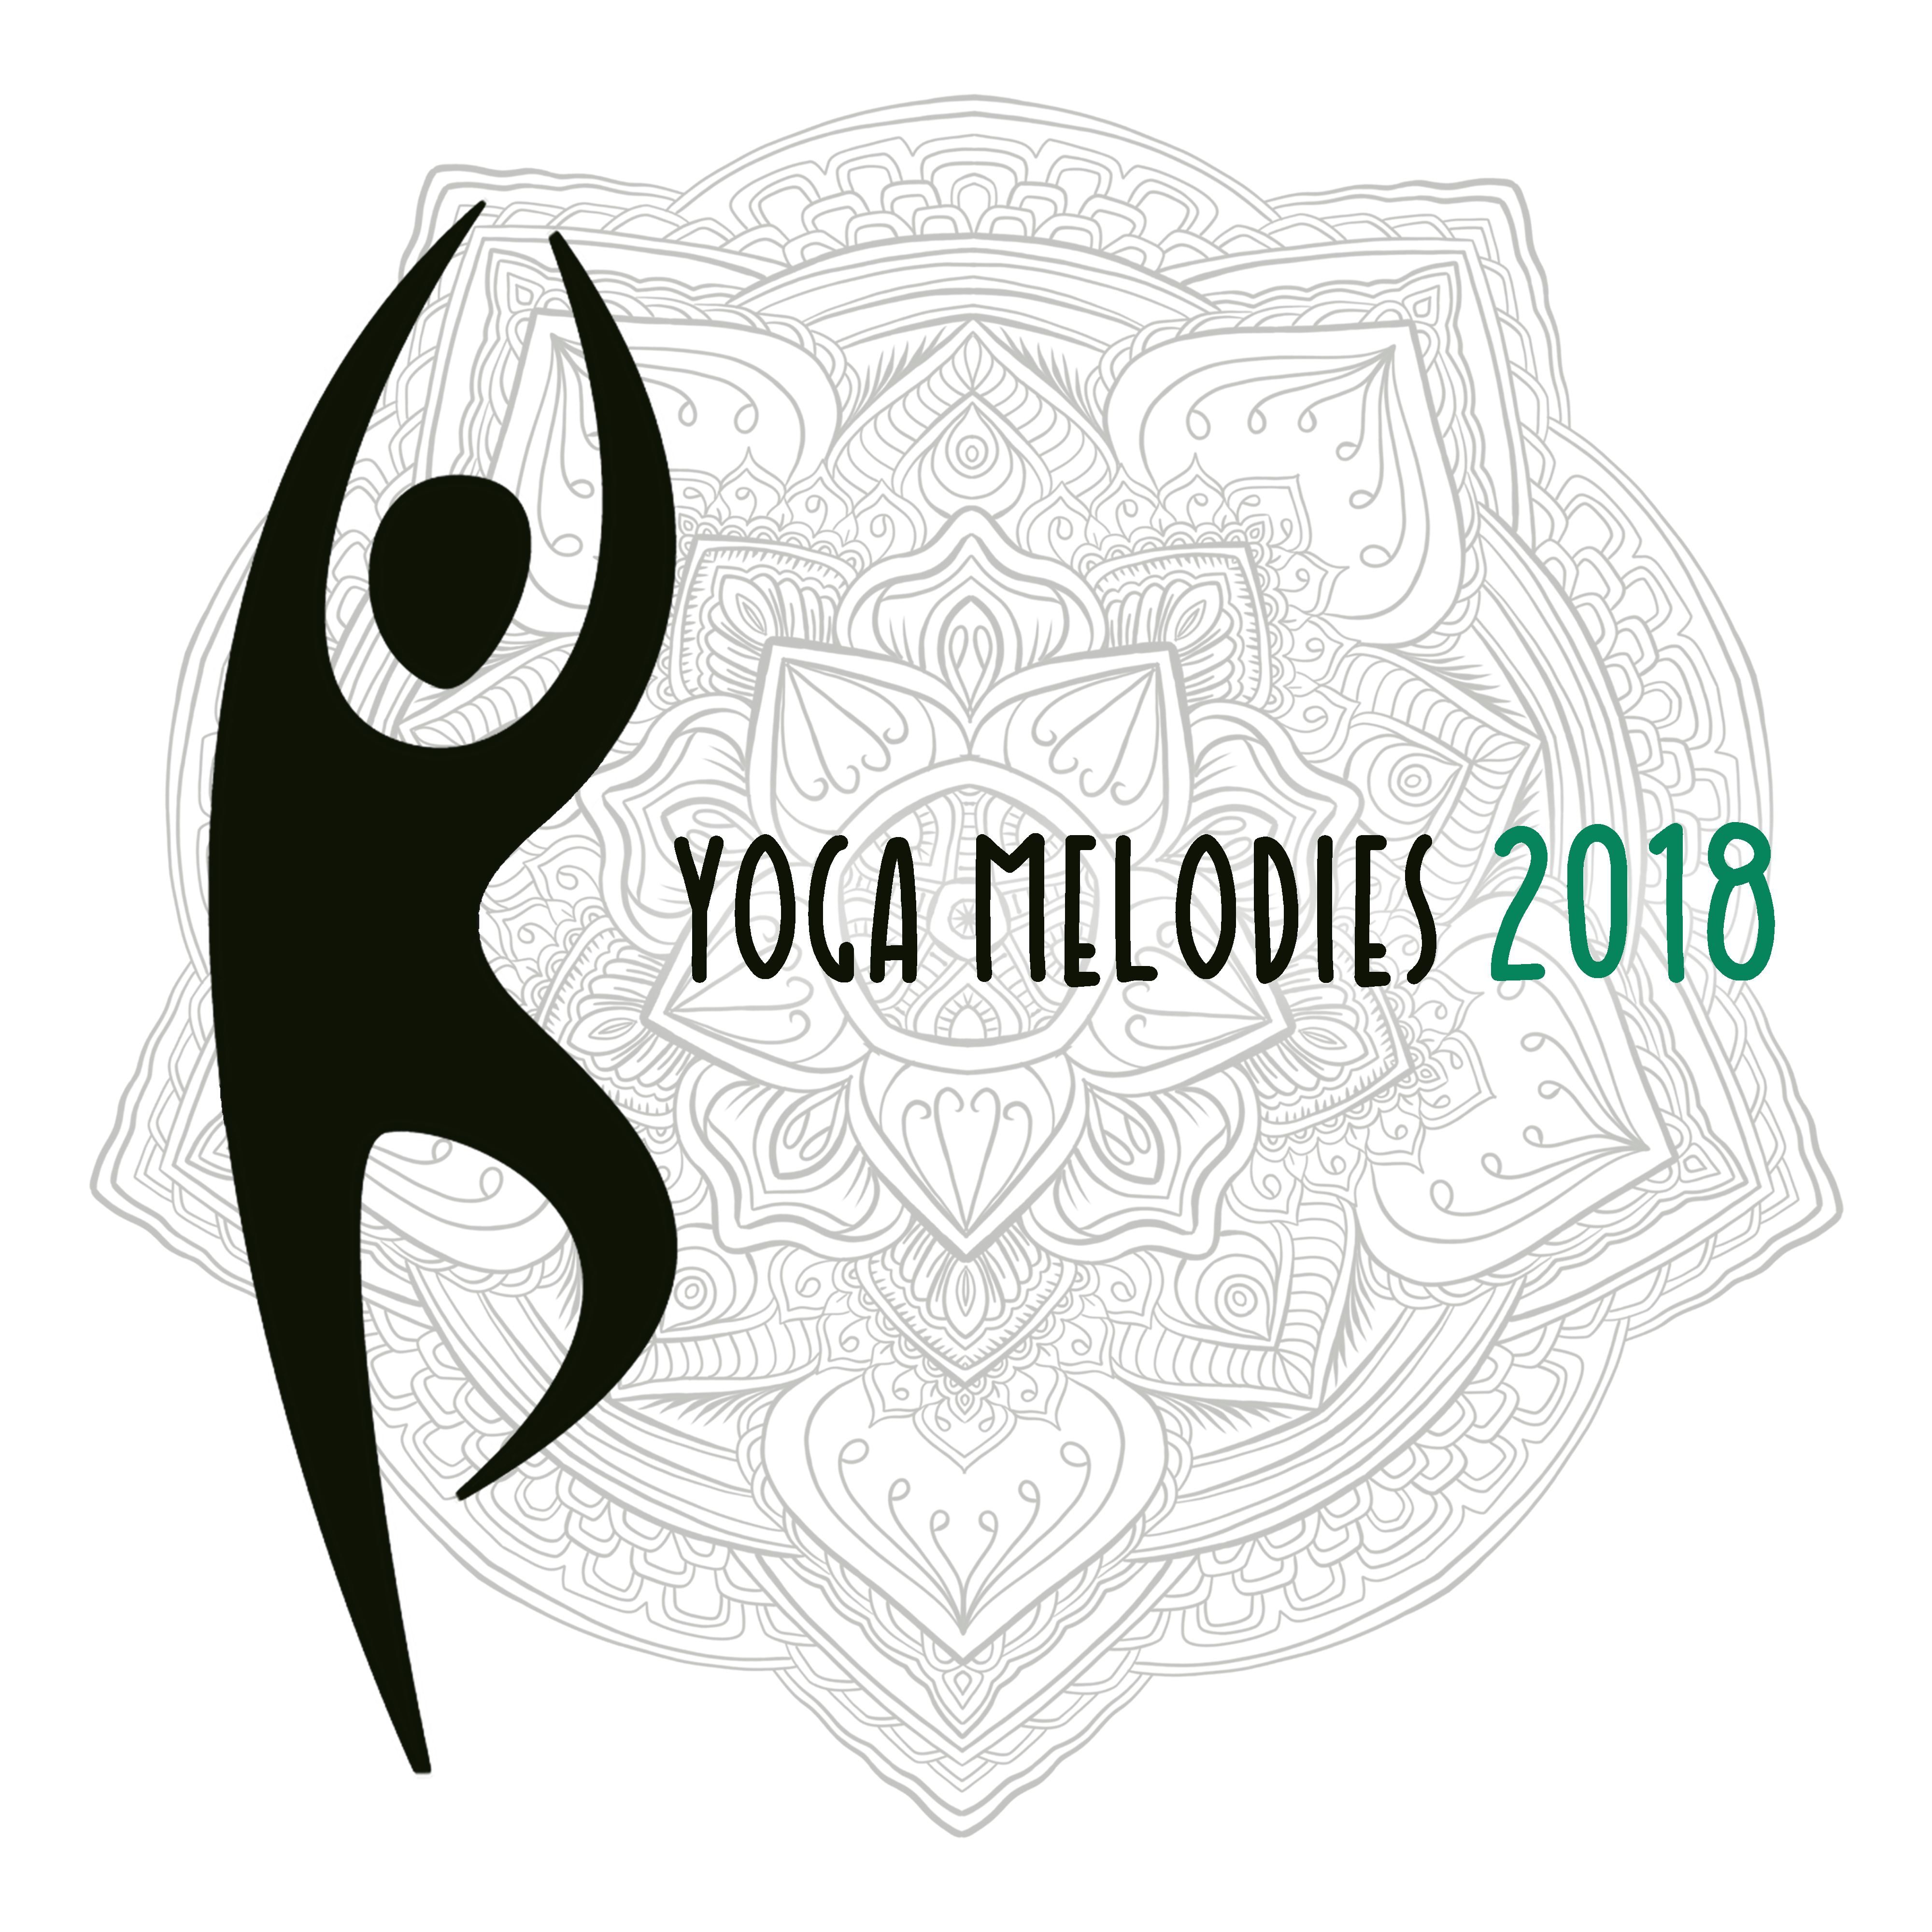 Yoga Melodies 2018